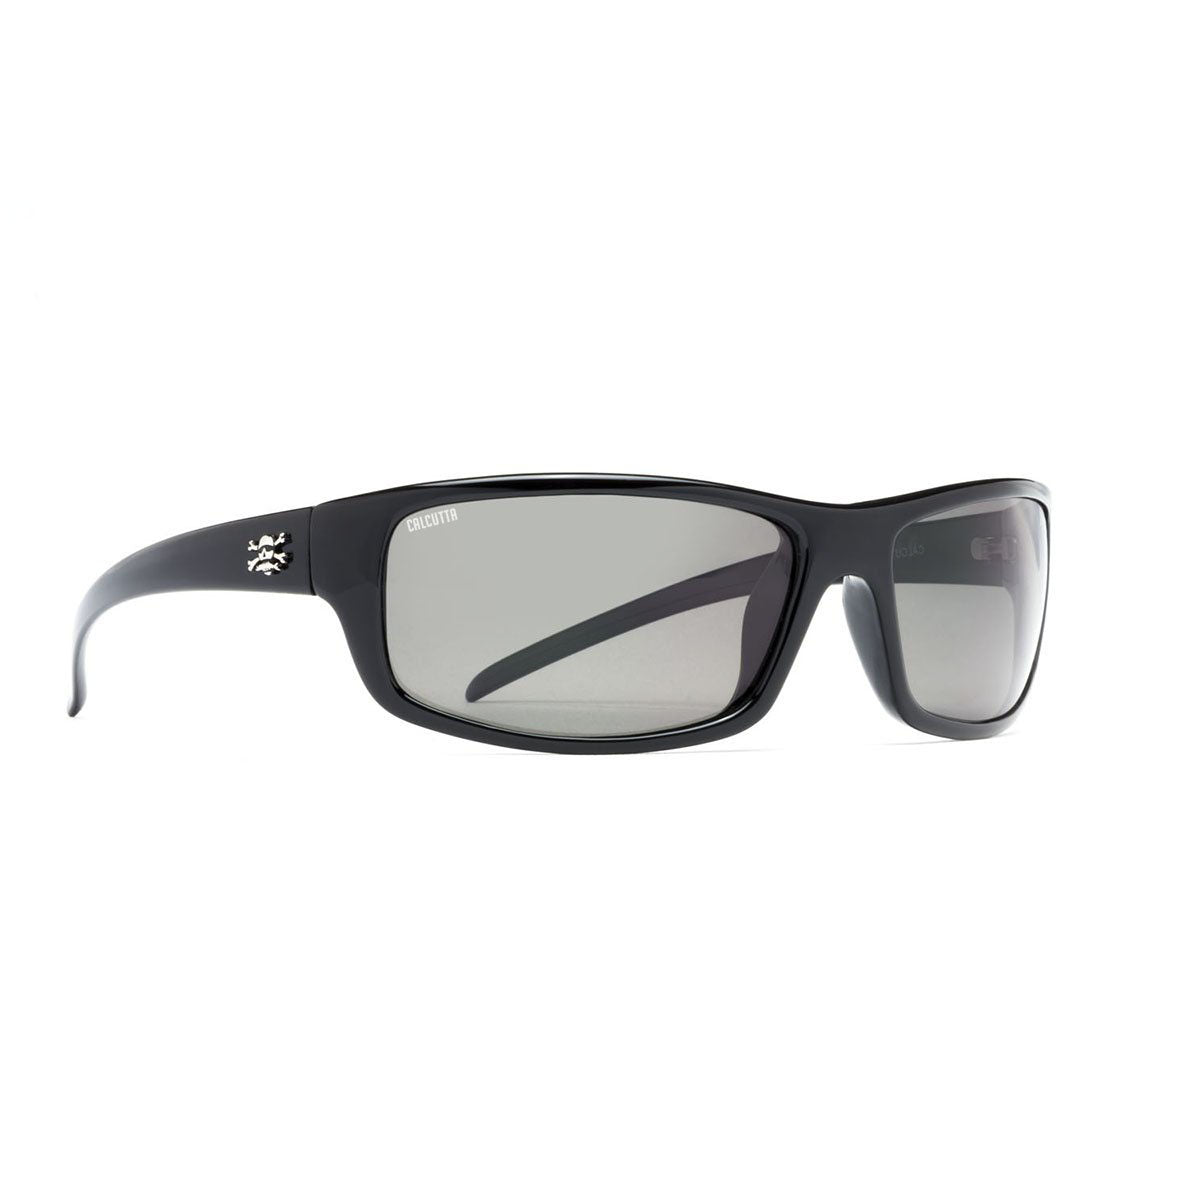 Calcutta Meads Polarized Sunglasses Shiny Black/Blue Mirror Lens